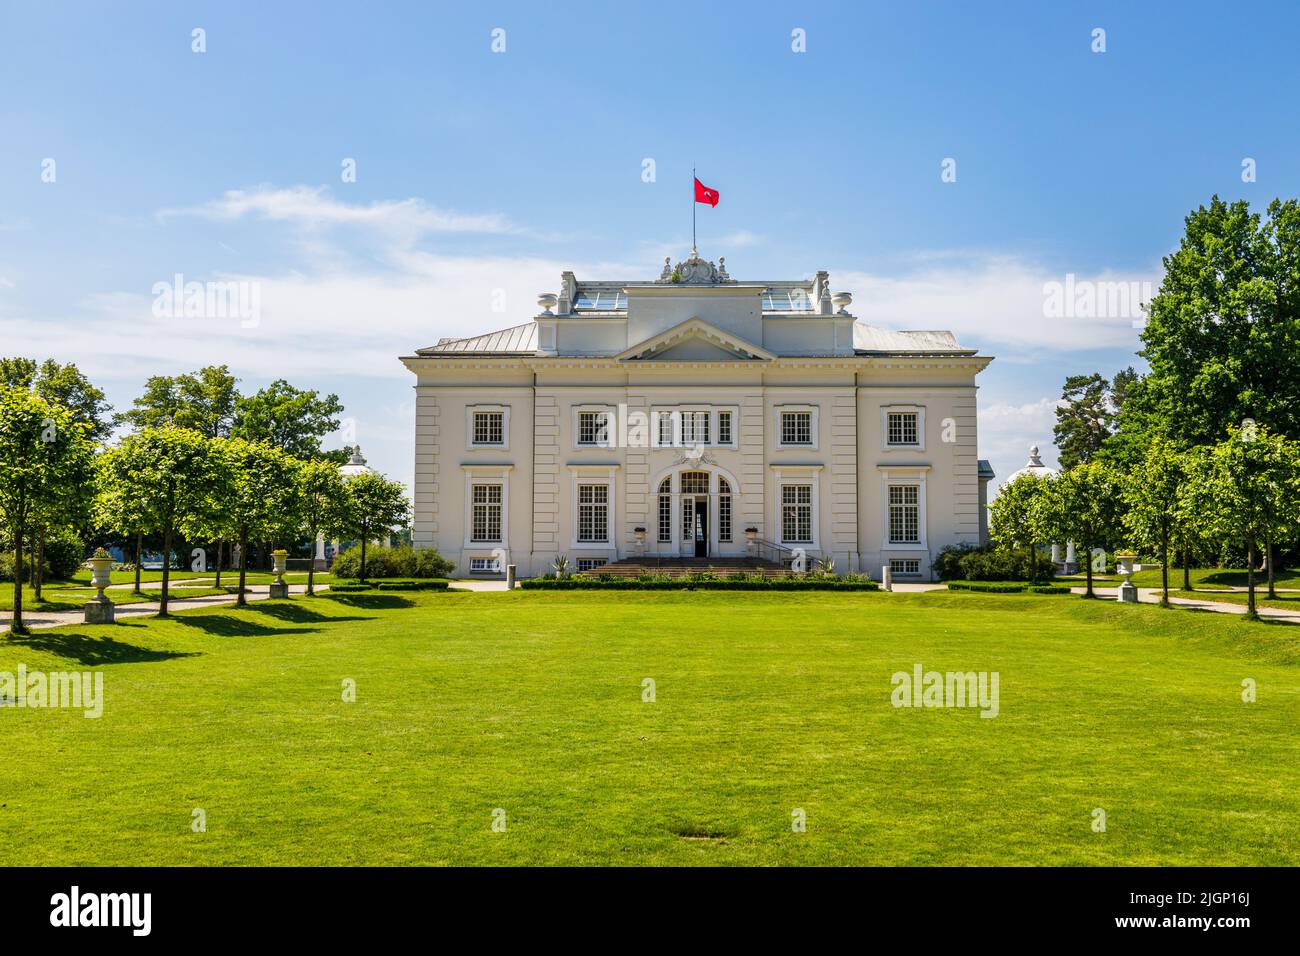 Uzutrakis manor. Colonnaded mansion set in landscaped gardens Stock Photo